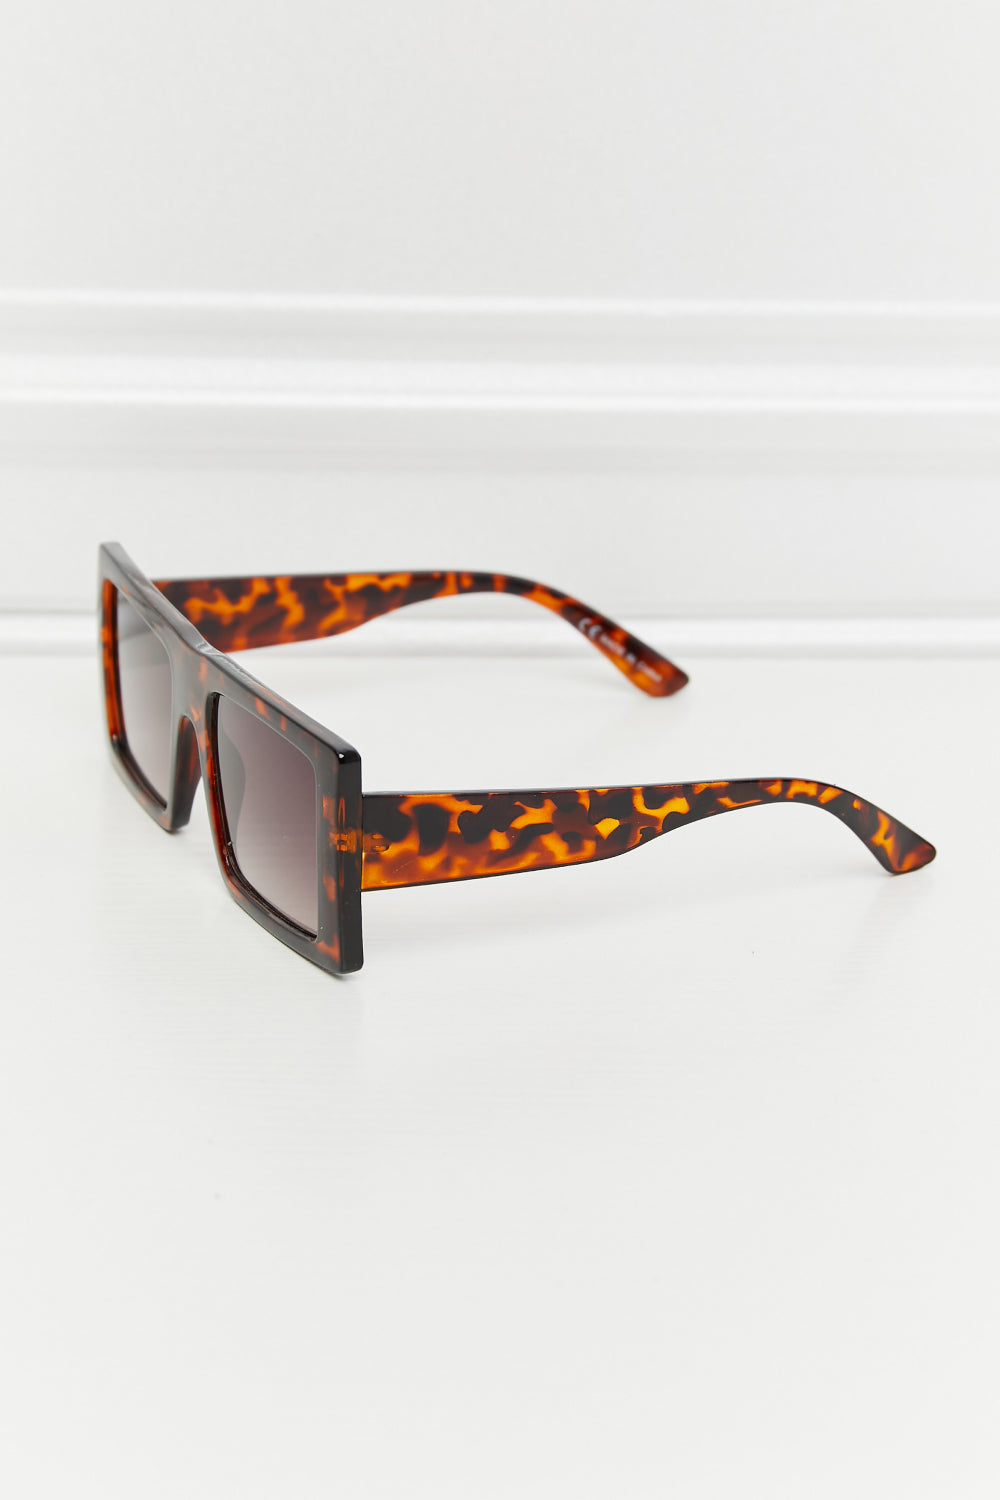 Square Polycarbonate Sunglasses Tangerine One Size Sunglasses by Vim&Vigor | Vim&Vigor Boutique